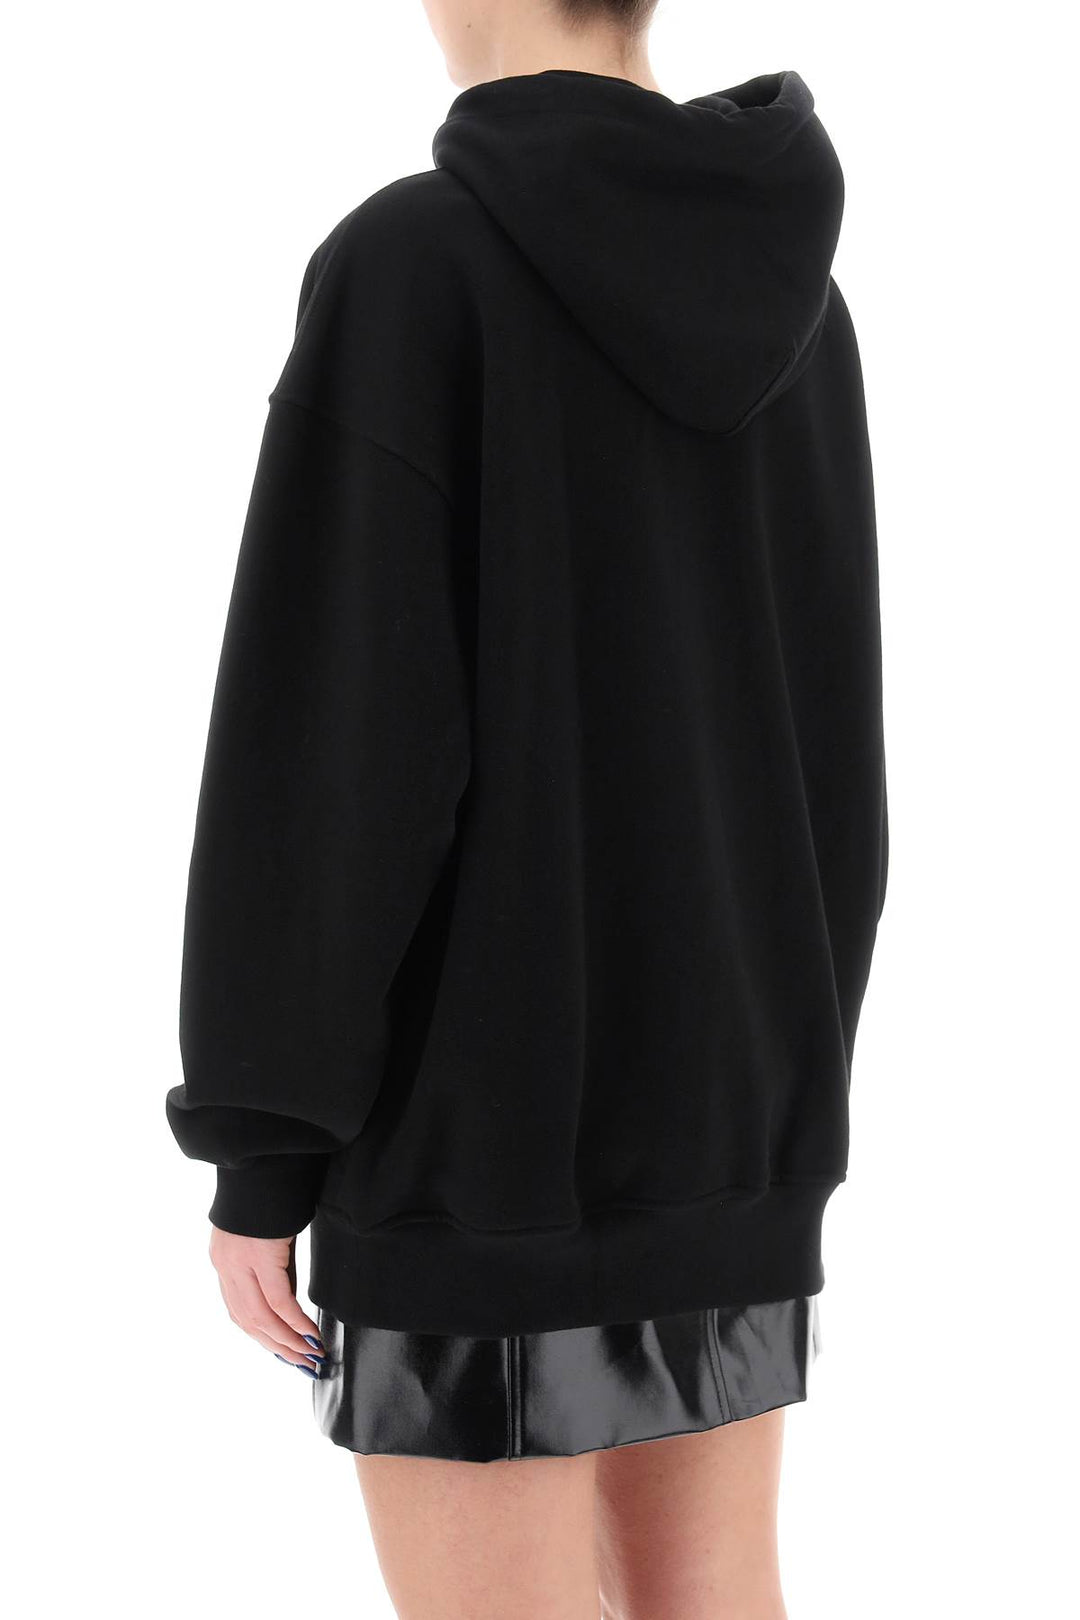 Wardrobe.nyc oversized zip-up hoodie-2